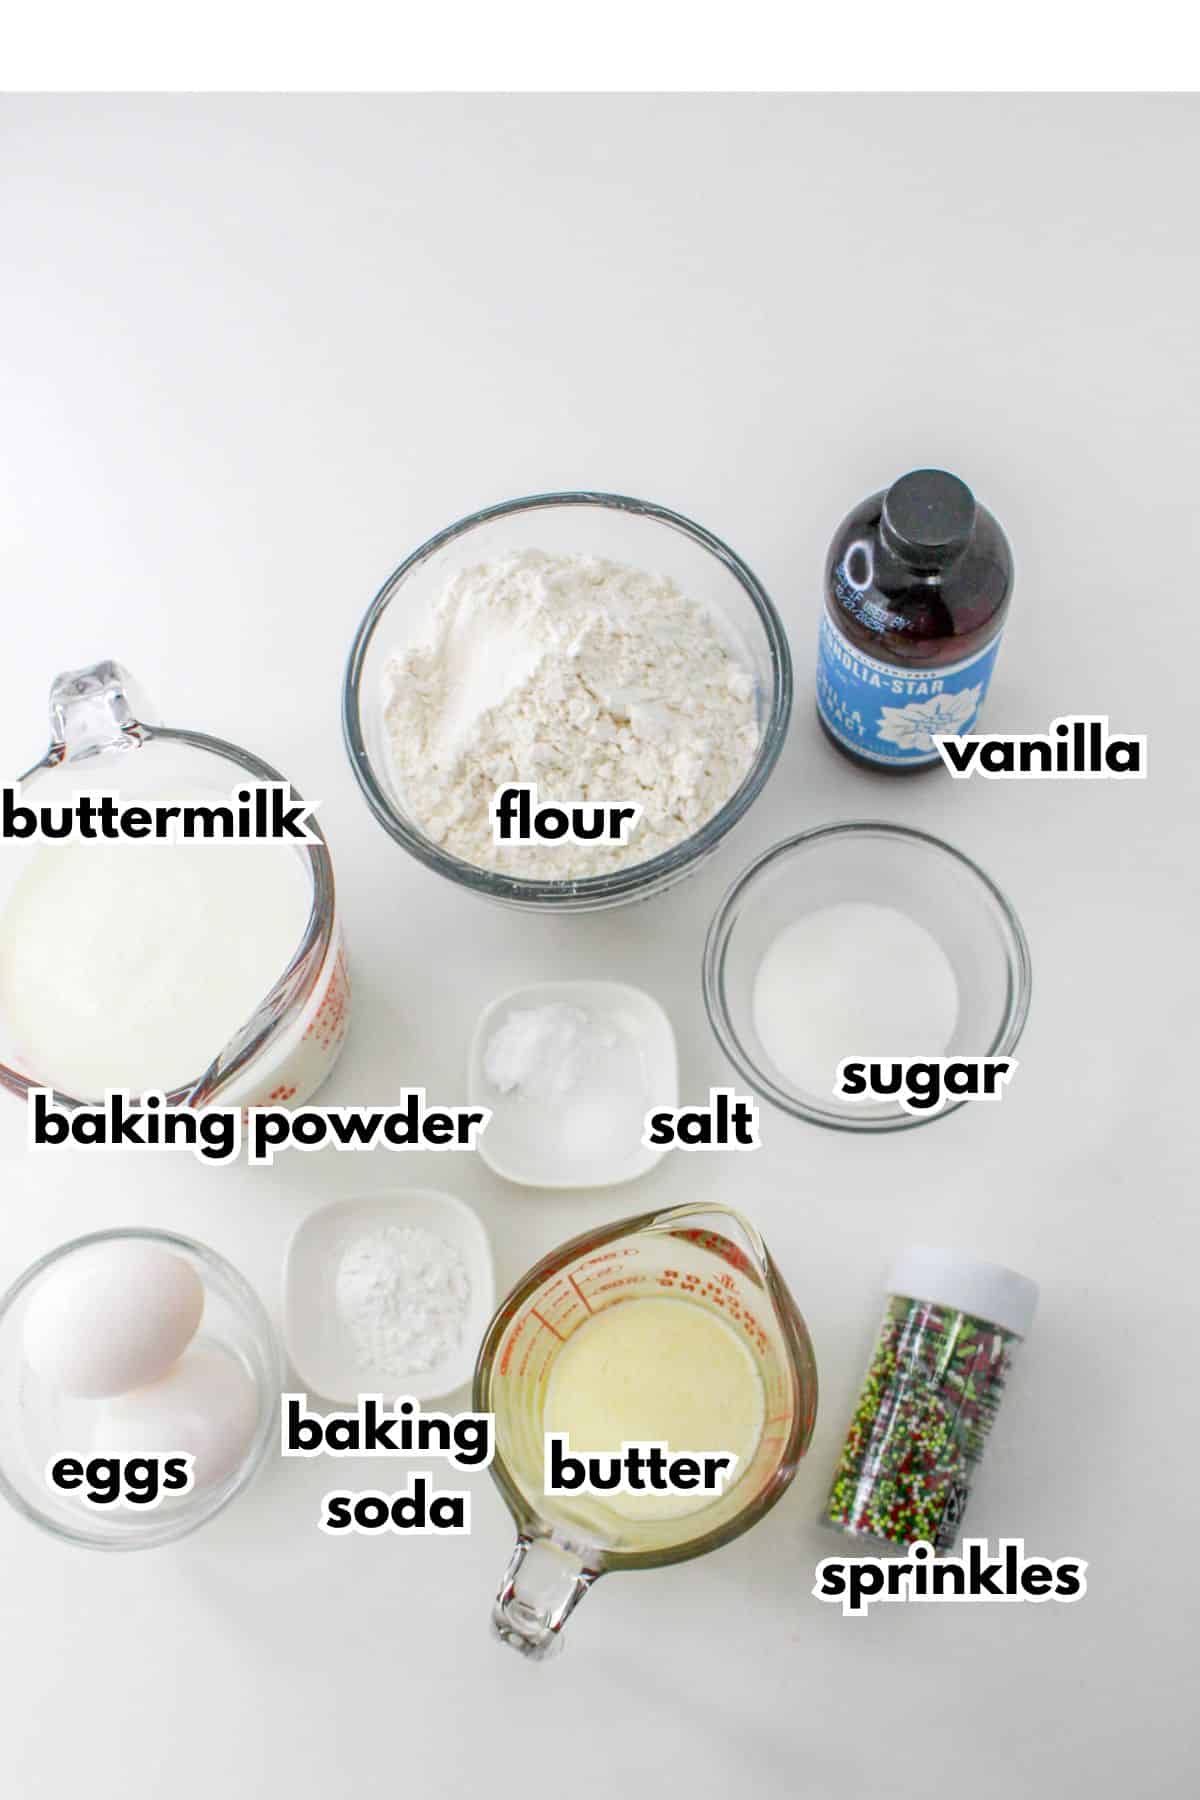 bowls of buttermilk, flour, vanilla extract, baking powder, salt, sugar, eggs, baking soda, butter, and sprinkles.